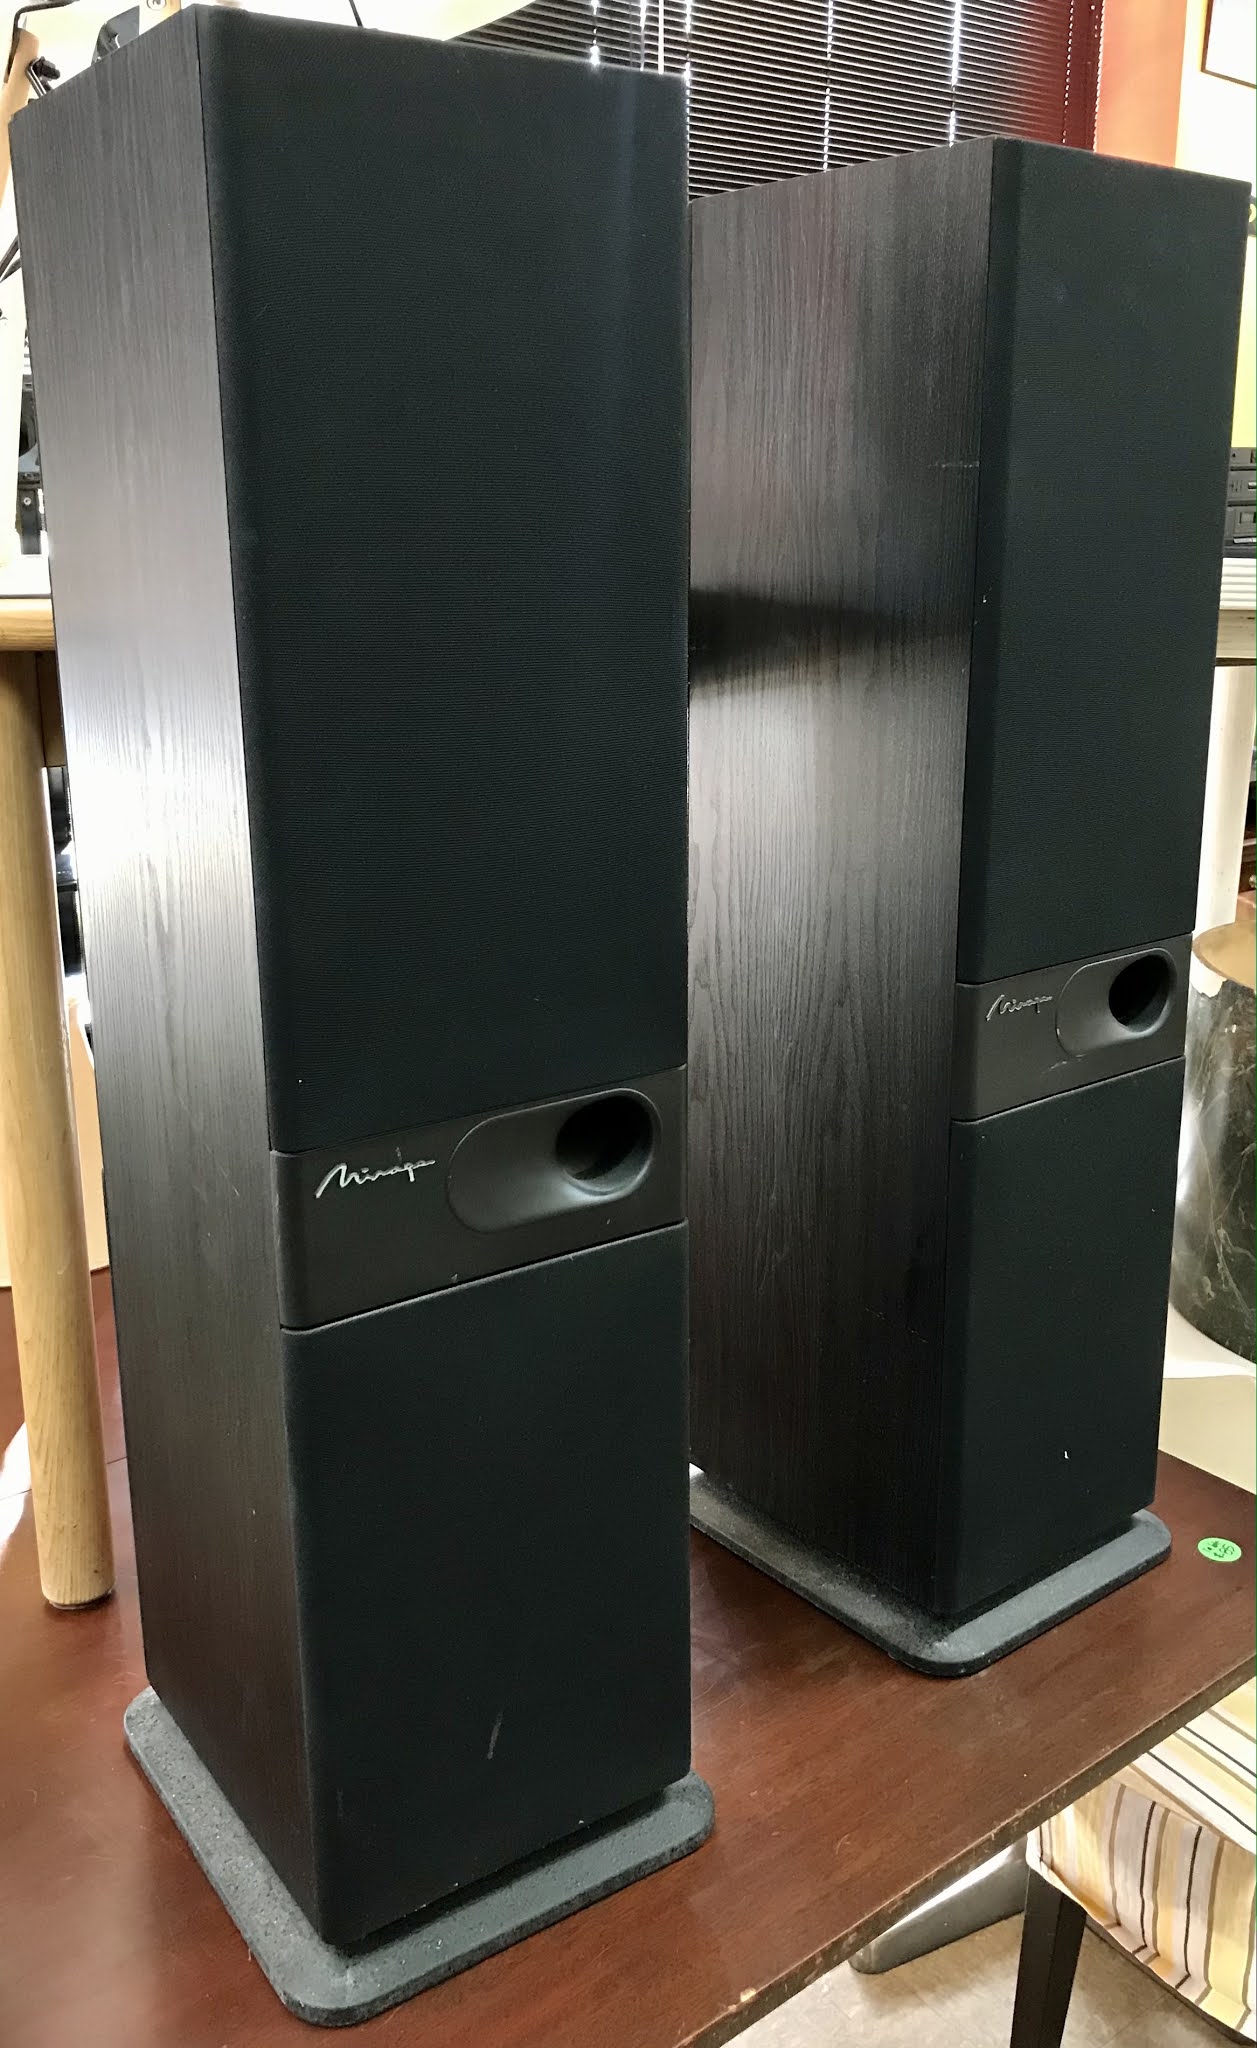 Noodlottig lens Bij zonsopgang Uhuru Furniture & Collectibles: Pair of M-790 Mirage Speakers - $125 SOLD